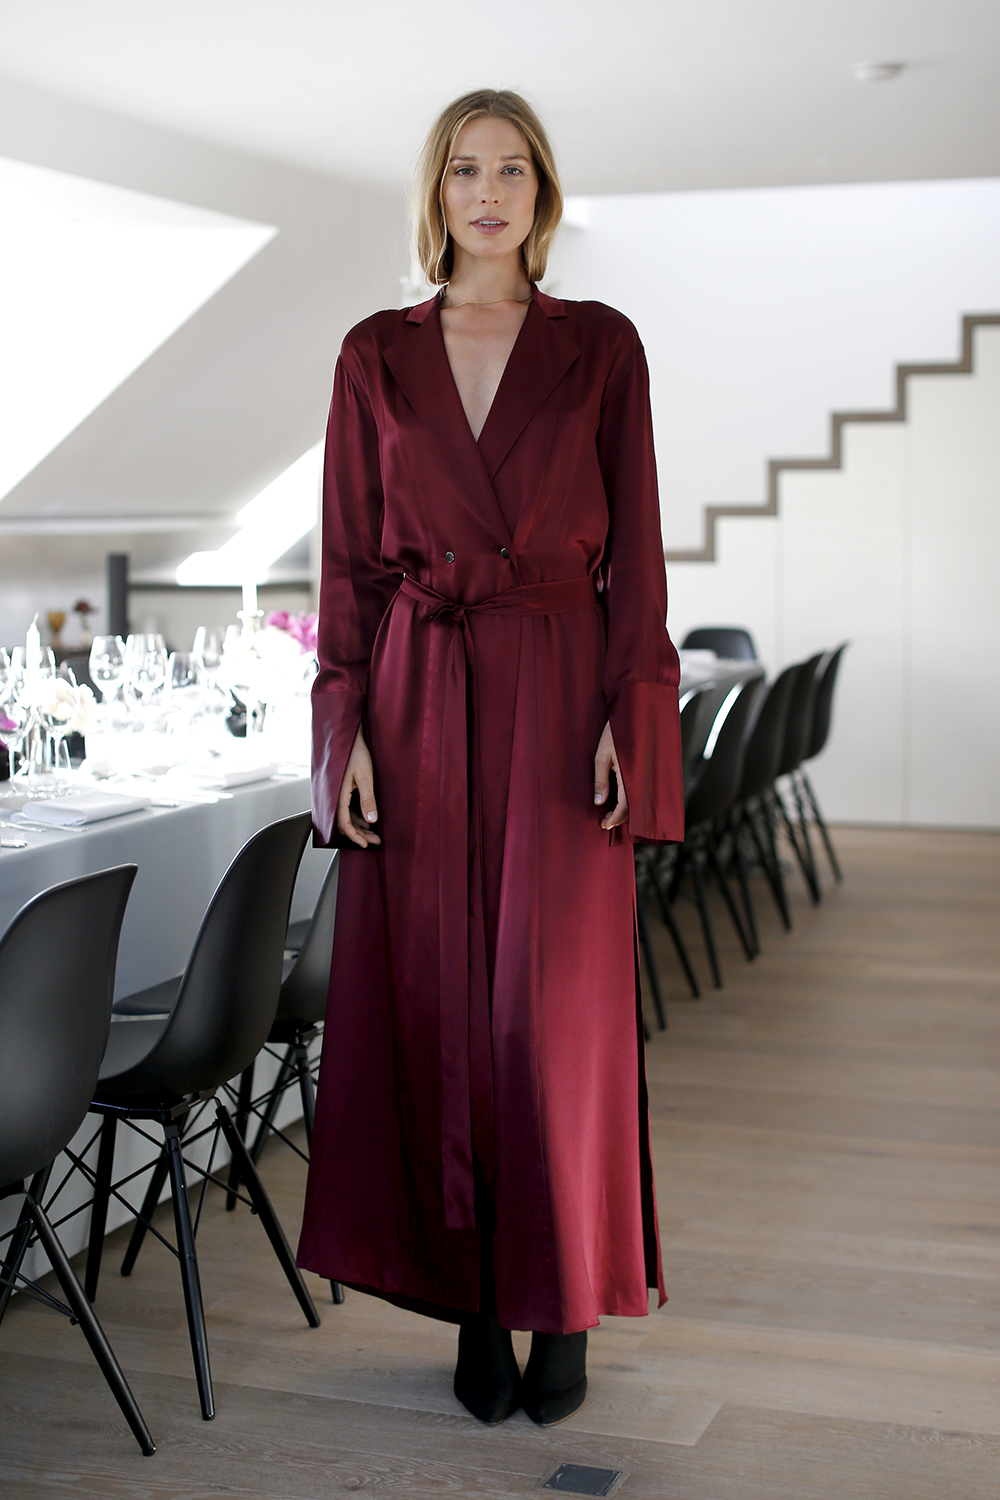 German model Sarah Brandner during the Clos19 dinner on July 13th in Munich.